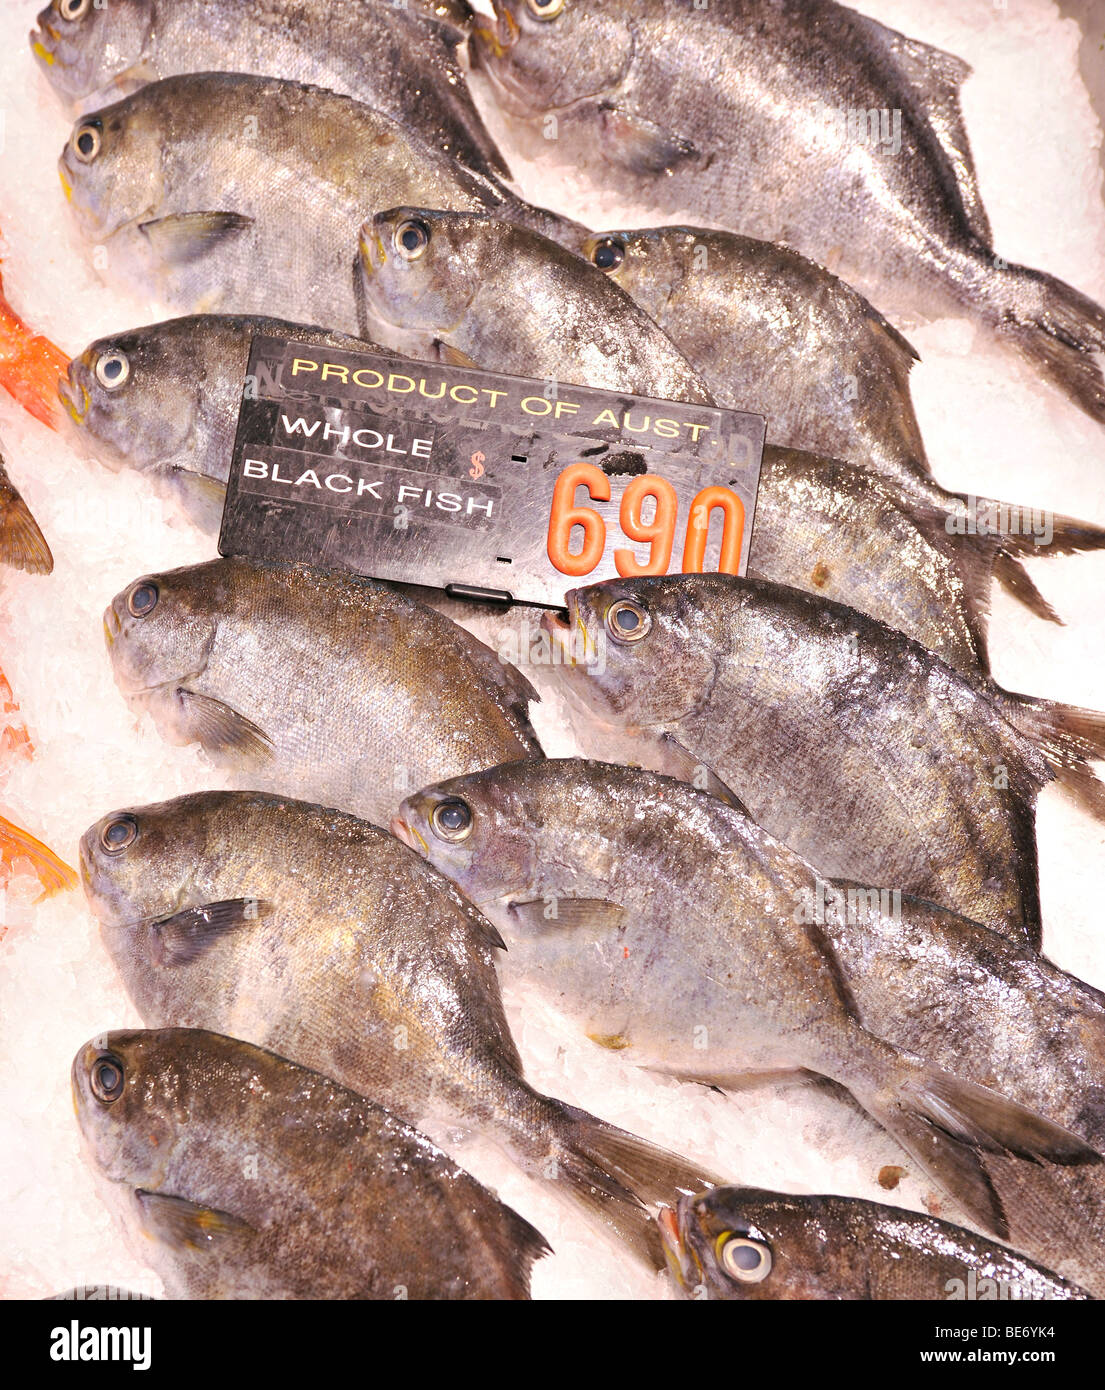 Australischen Fluss Blackfish (Gadopsis Marmoratu), Sydney Fish Market, Sydney, New South Wales, Australien Stockfoto